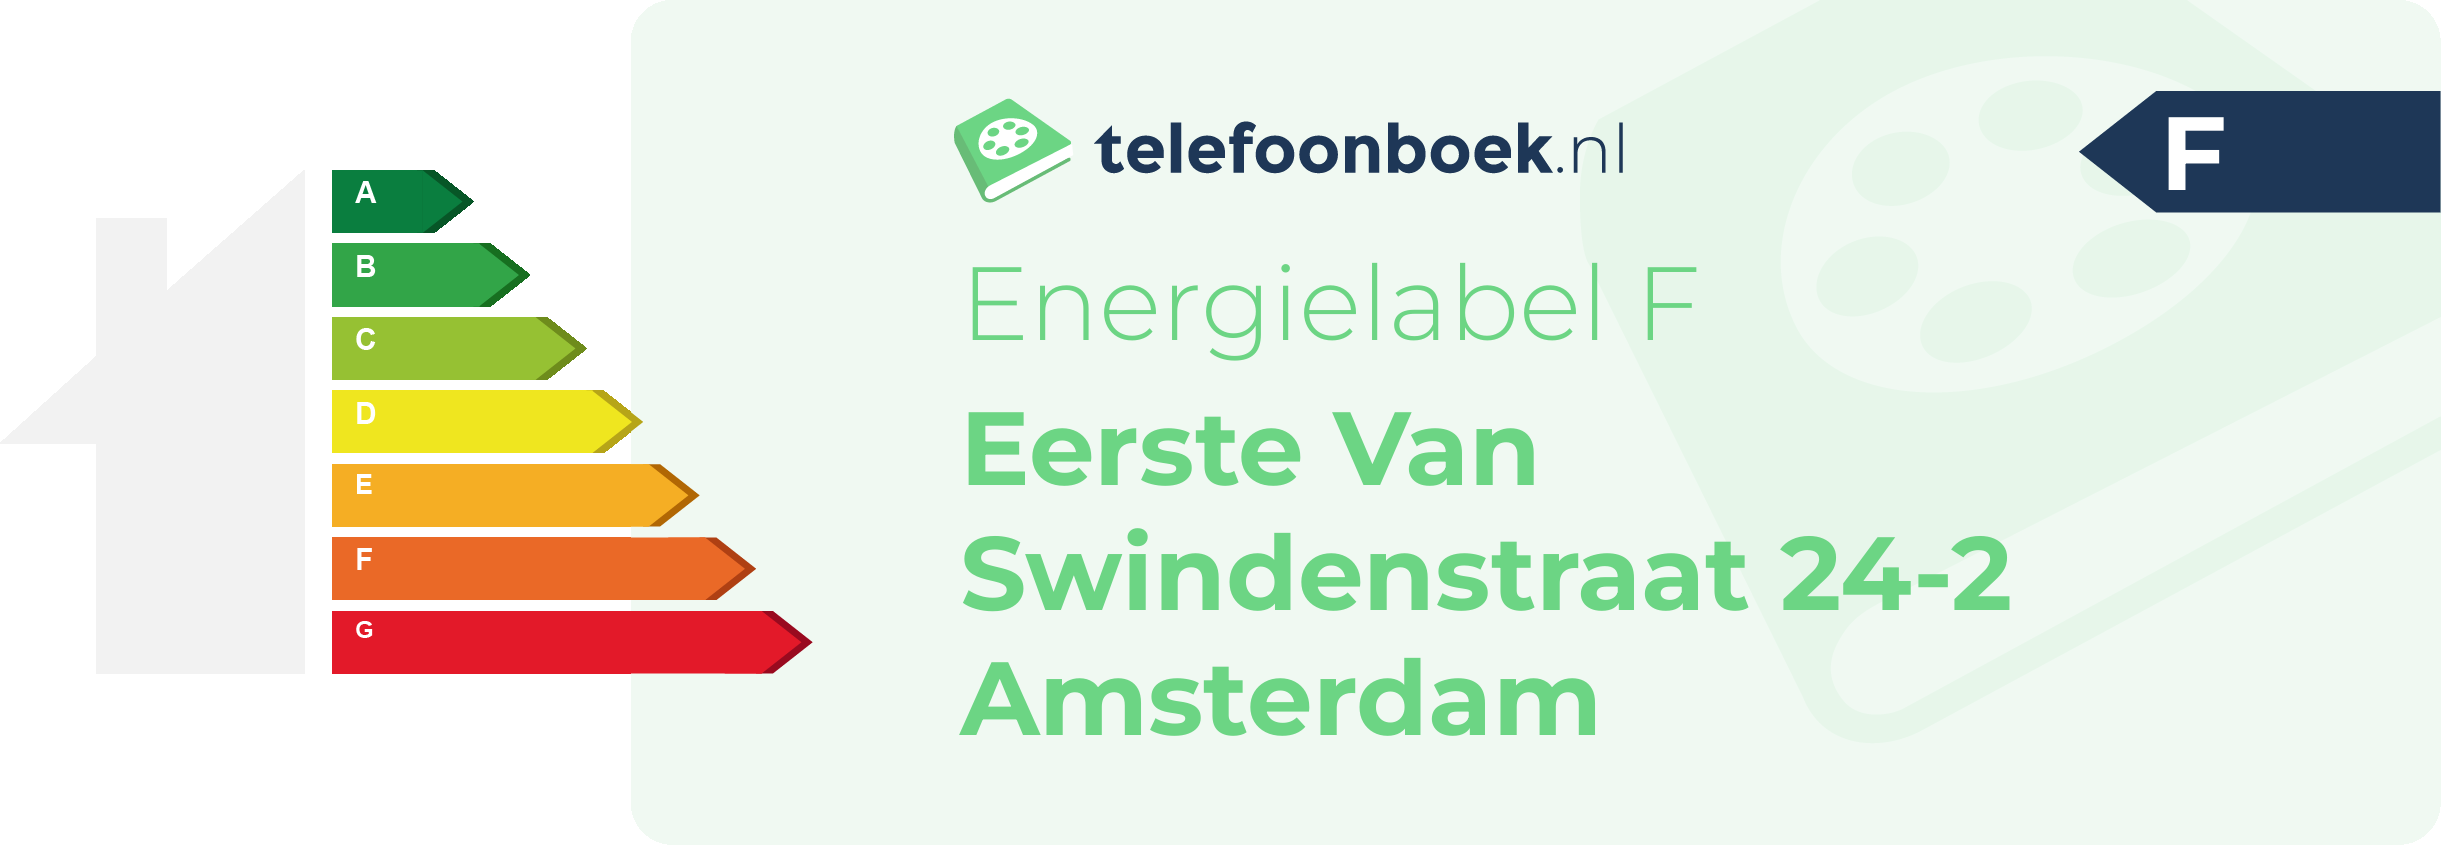 Energielabel Eerste Van Swindenstraat 24-2 Amsterdam